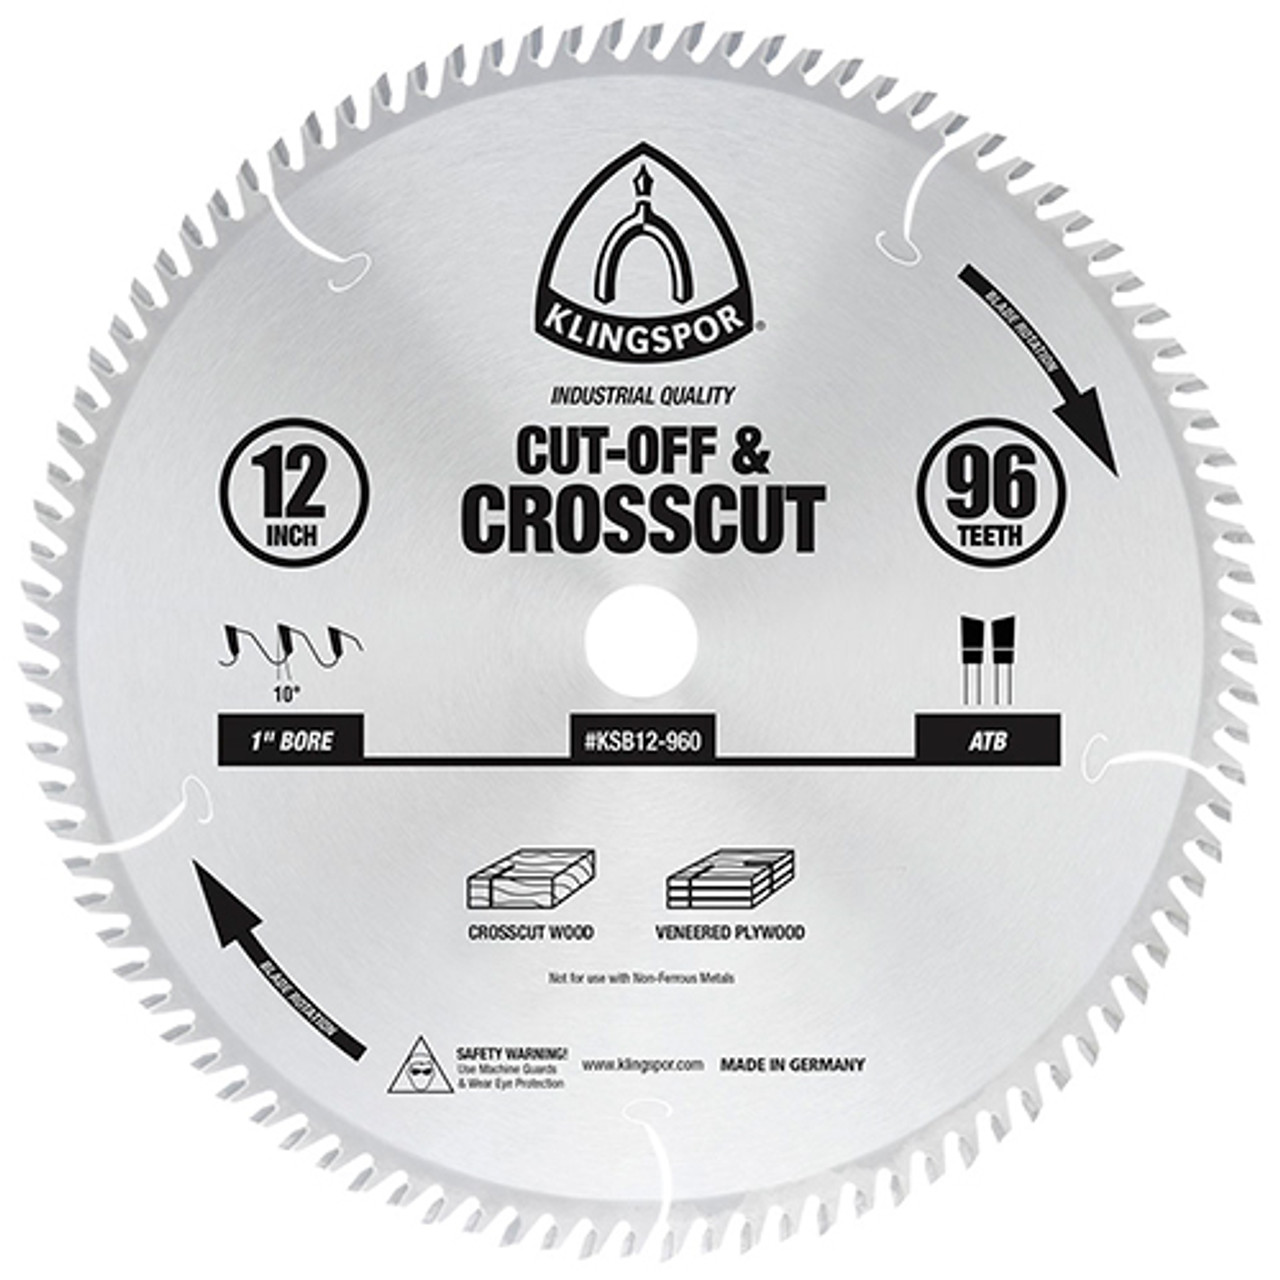 Klingspor's Cut-Off & Crosscut Blade, 12"x 96 Teeth